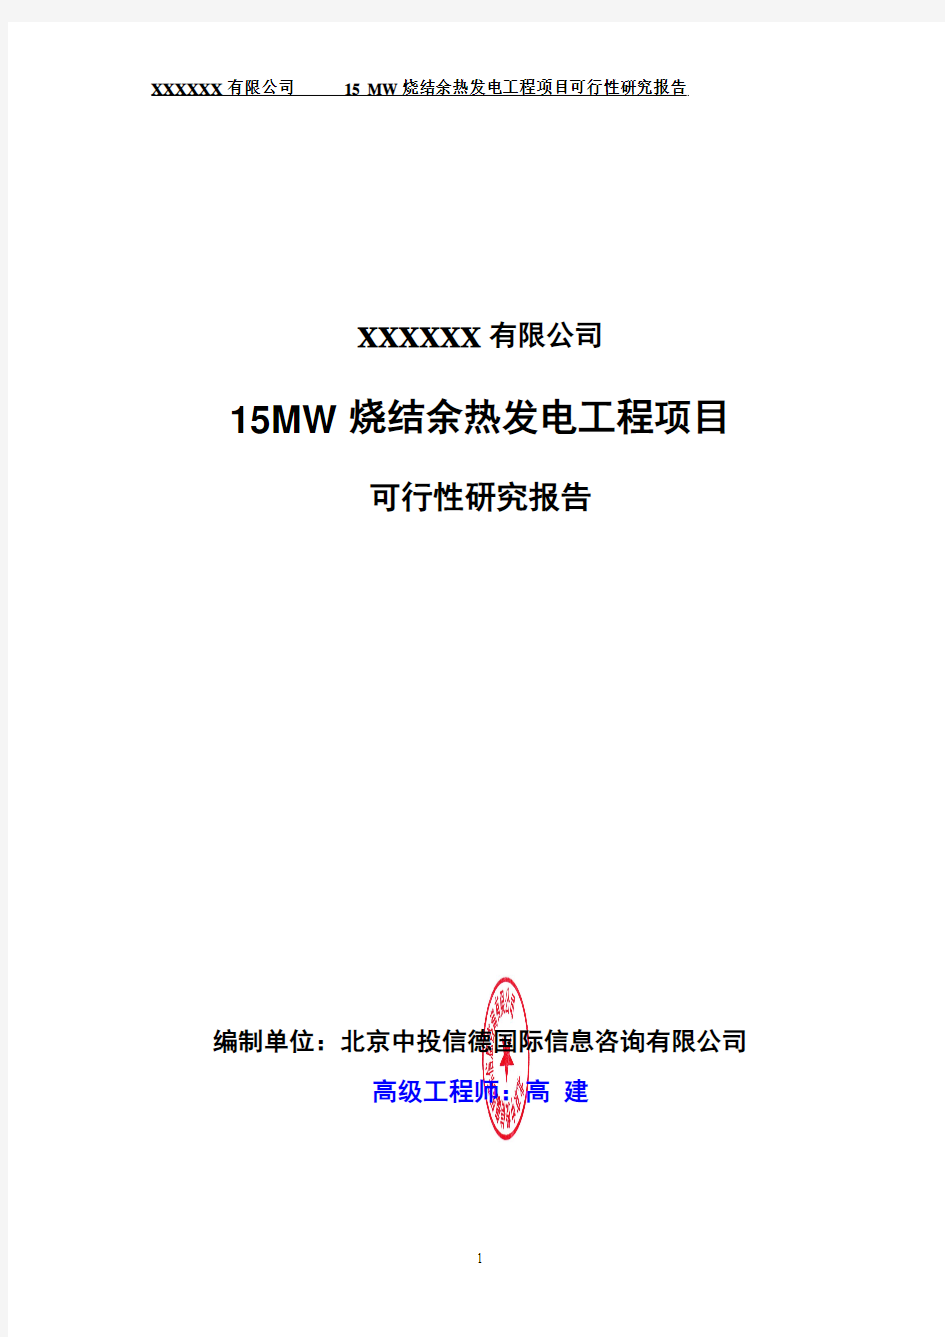 15MW烧结余热发电工程项目可行性研究报告